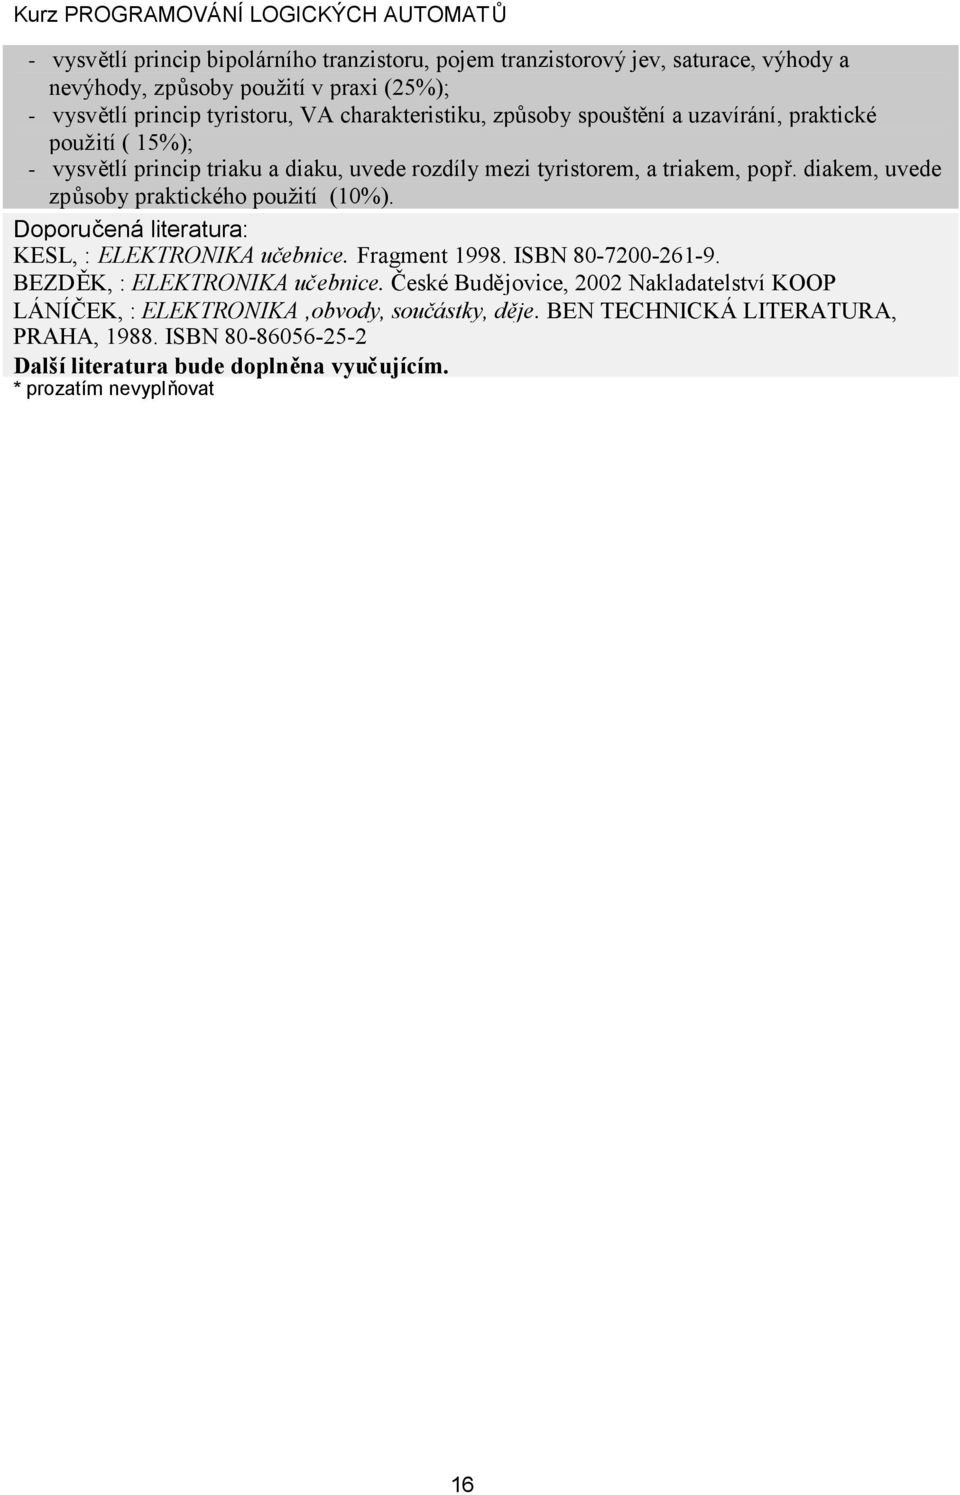 diakem, uvede způsoby praktického použití (10%). Doporučená literatura: KESL, : ELEKTRONIKA učebnice. Fragment 1998. ISBN 80-7200-261-9. BEZDĚK, : ELEKTRONIKA učebnice.